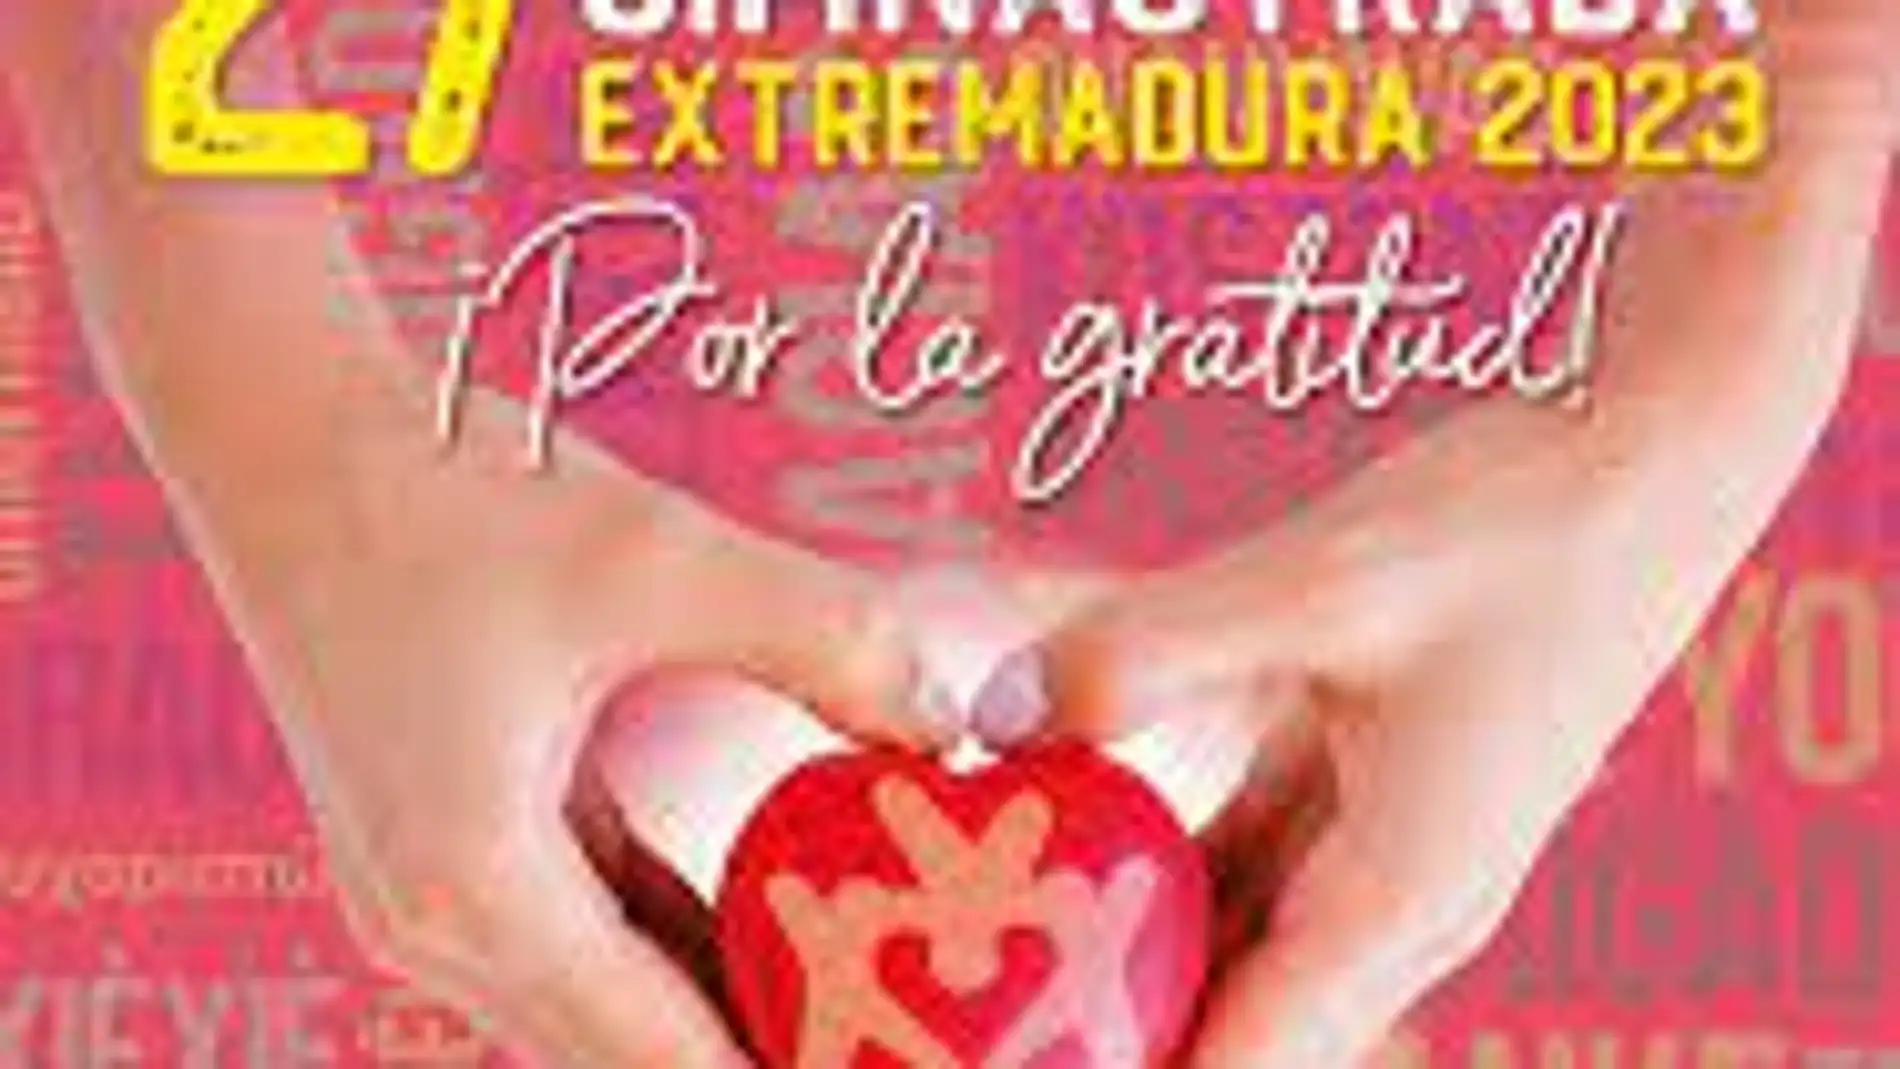 Cáceres acoge este sábado la XXVII Gimnastrada de Extremadura 